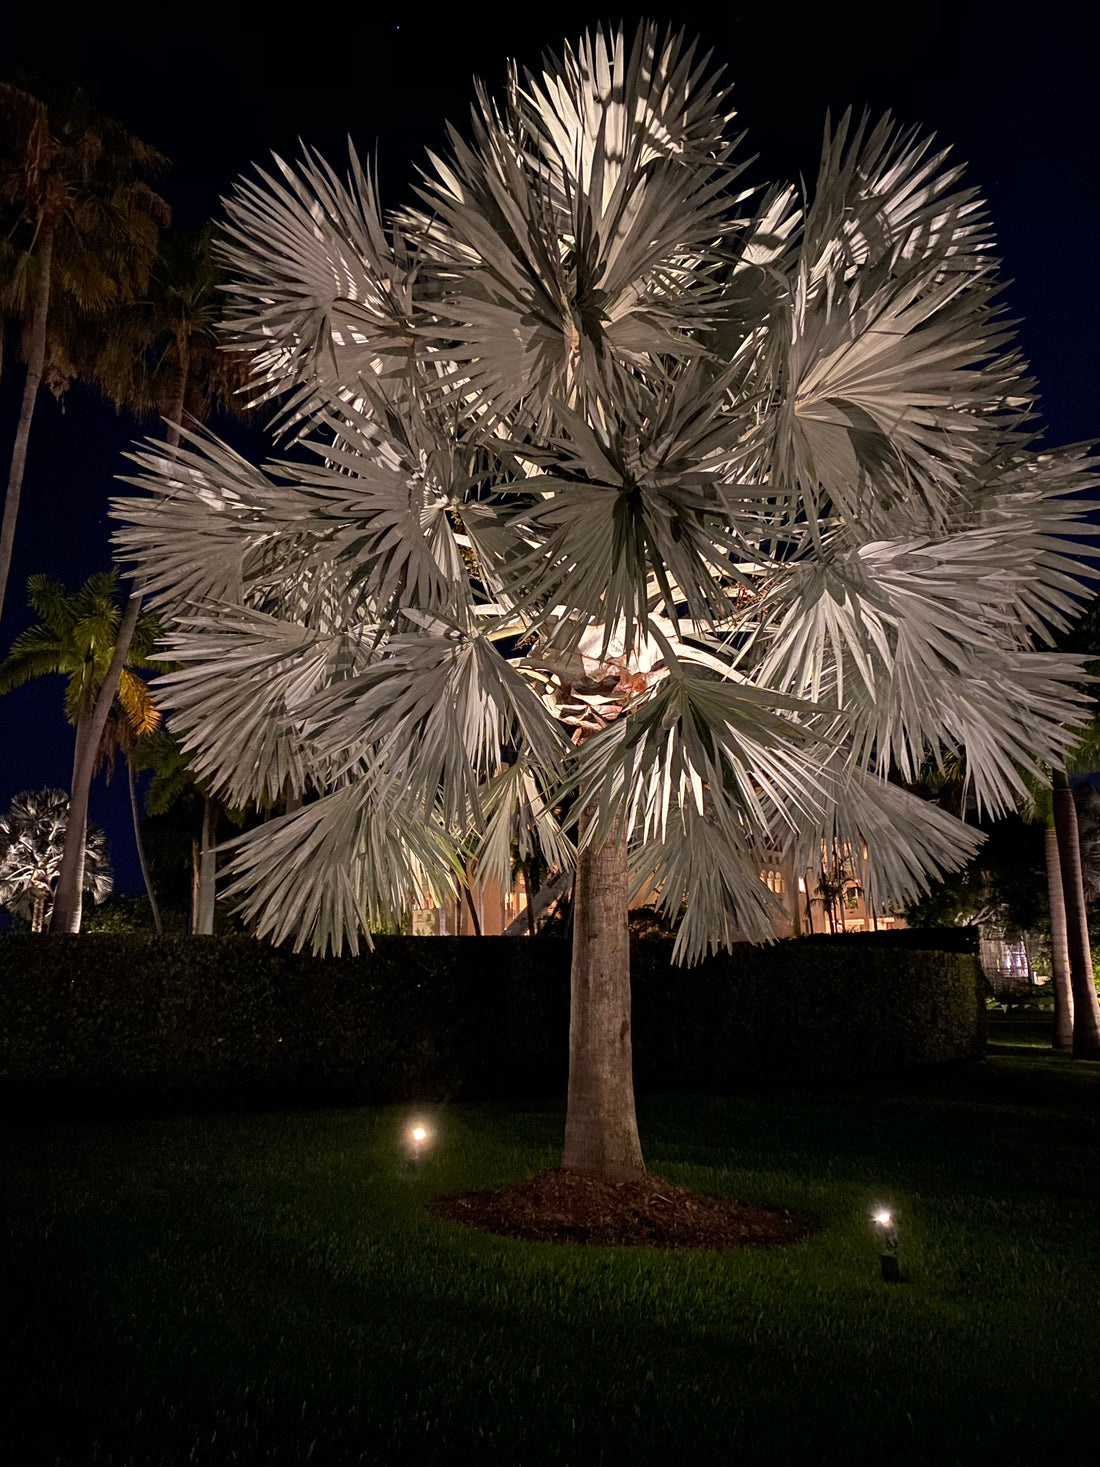 Bismarckia Nobilis, Silver Bismarck Palm